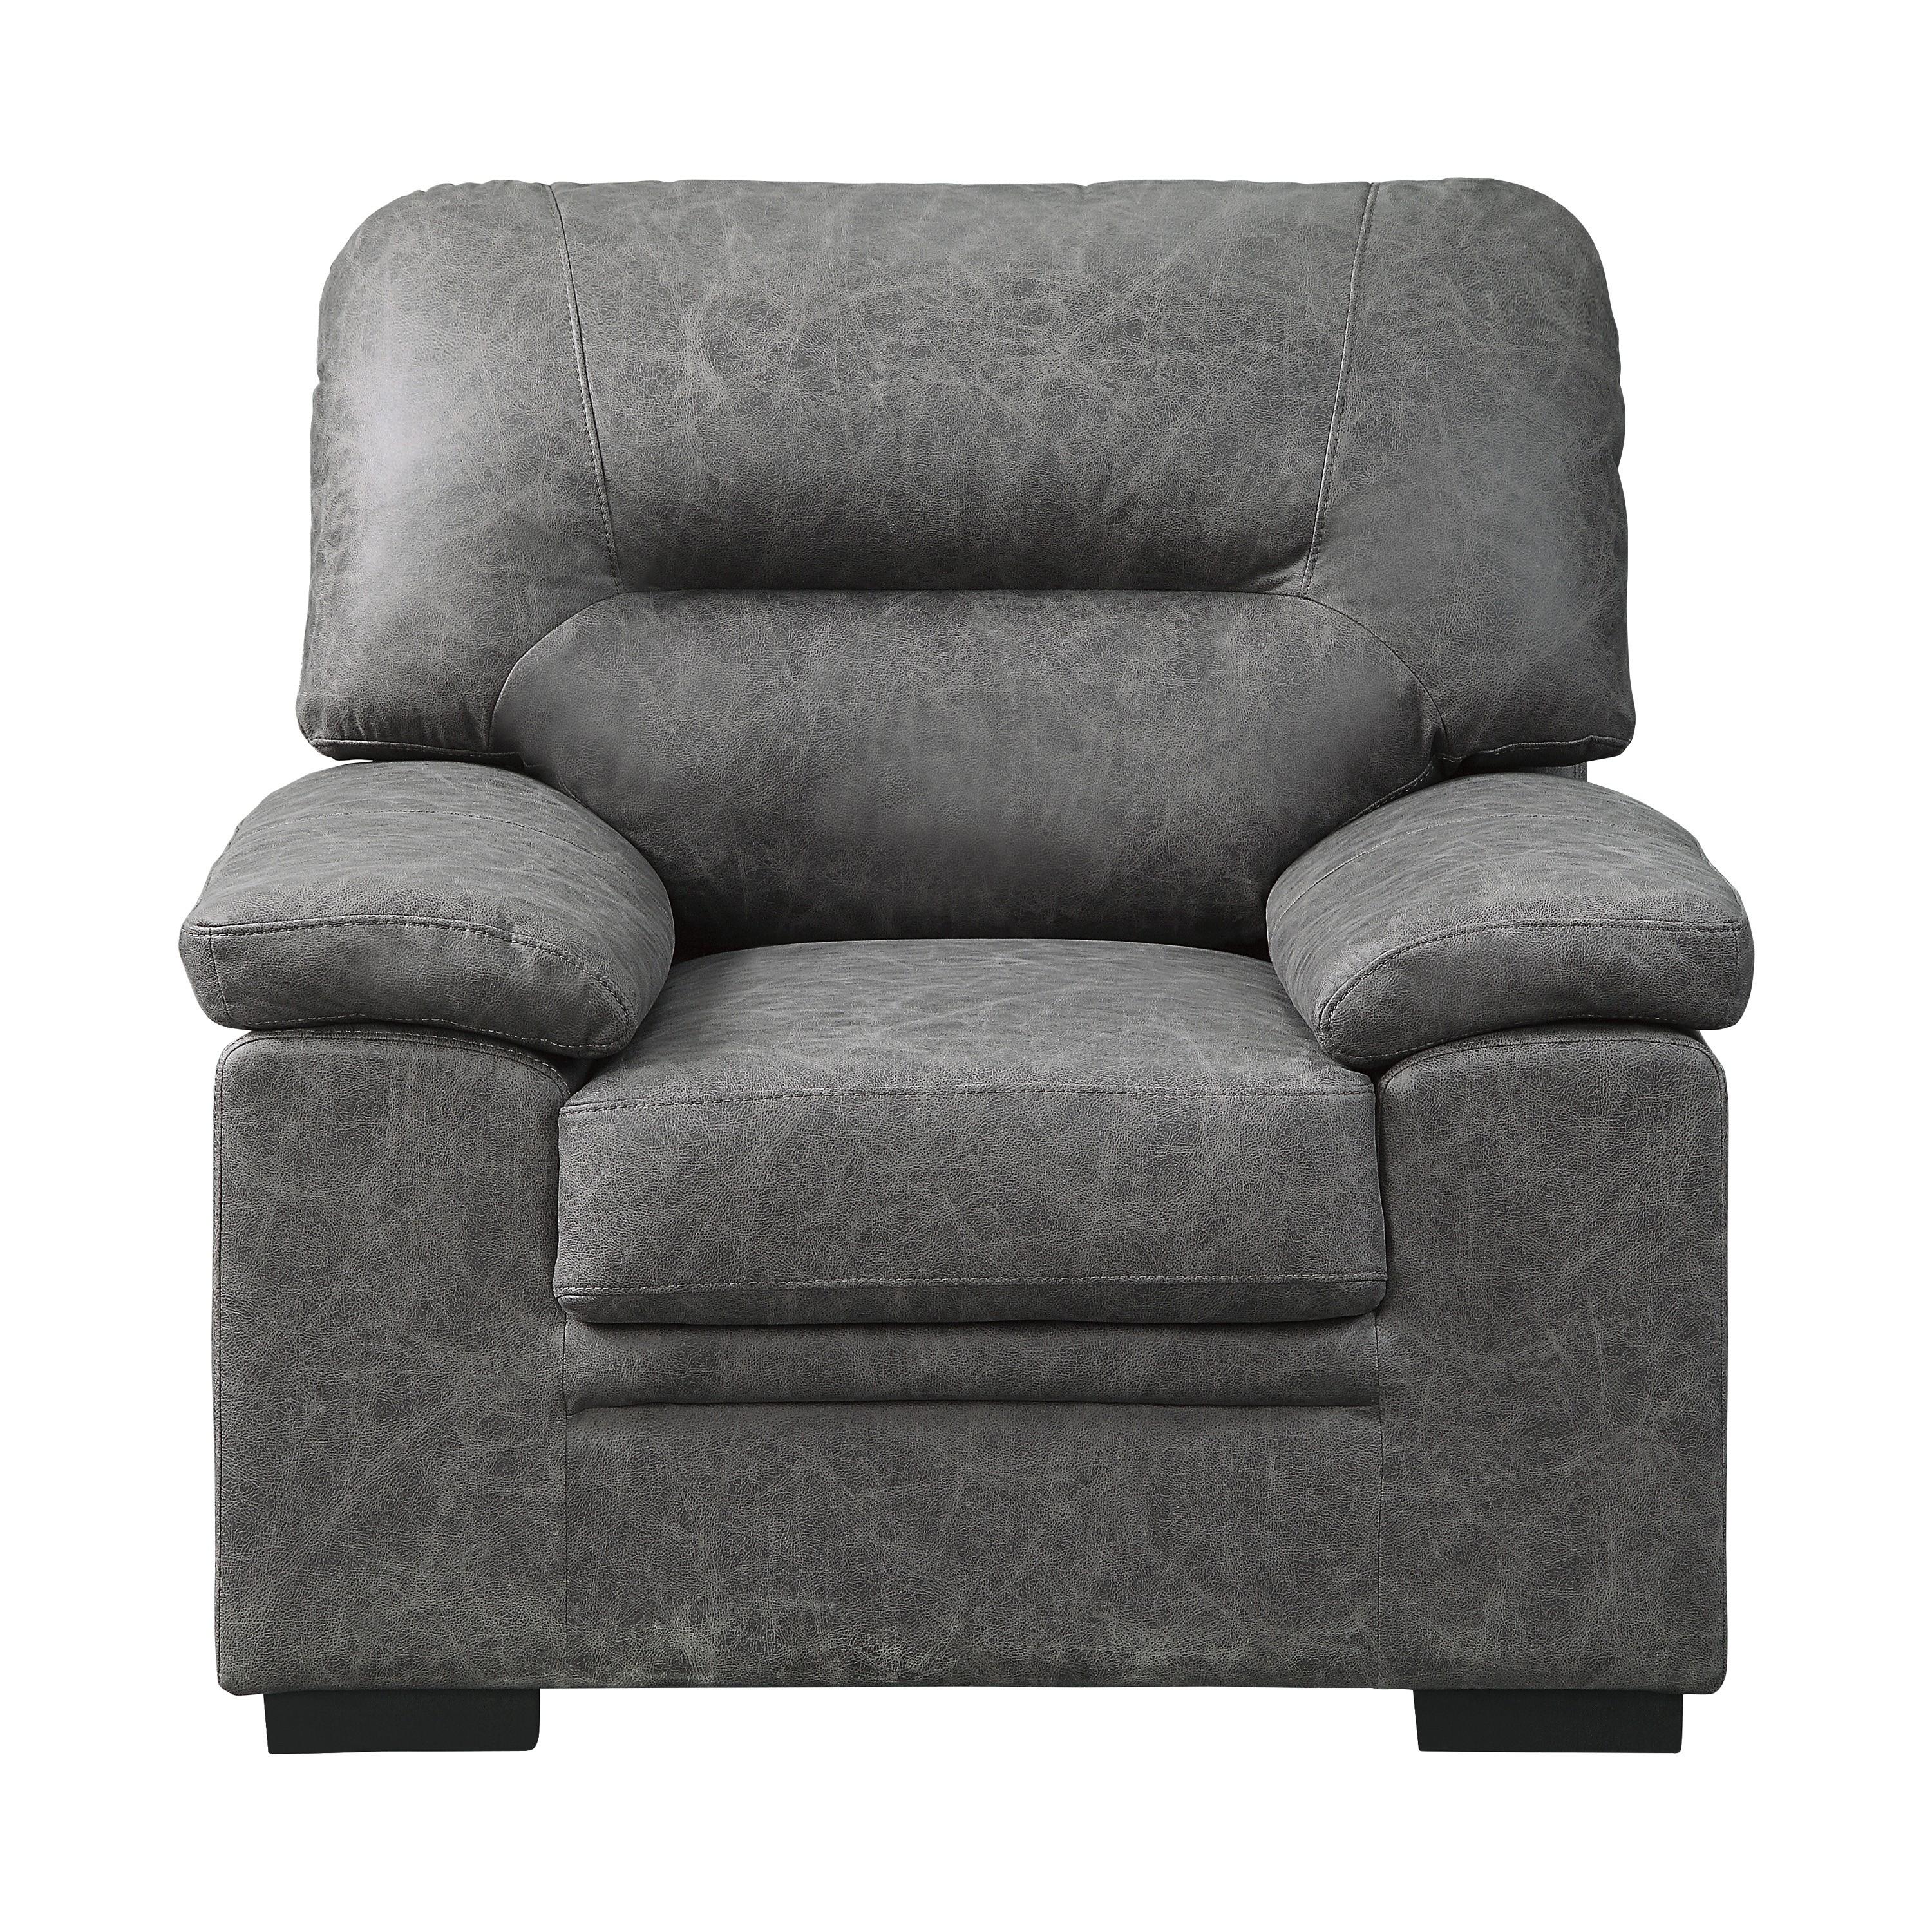 Transitional Arm Chair 9407DG-1 Michigan 9407DG-1 in Dark Gray Microfiber